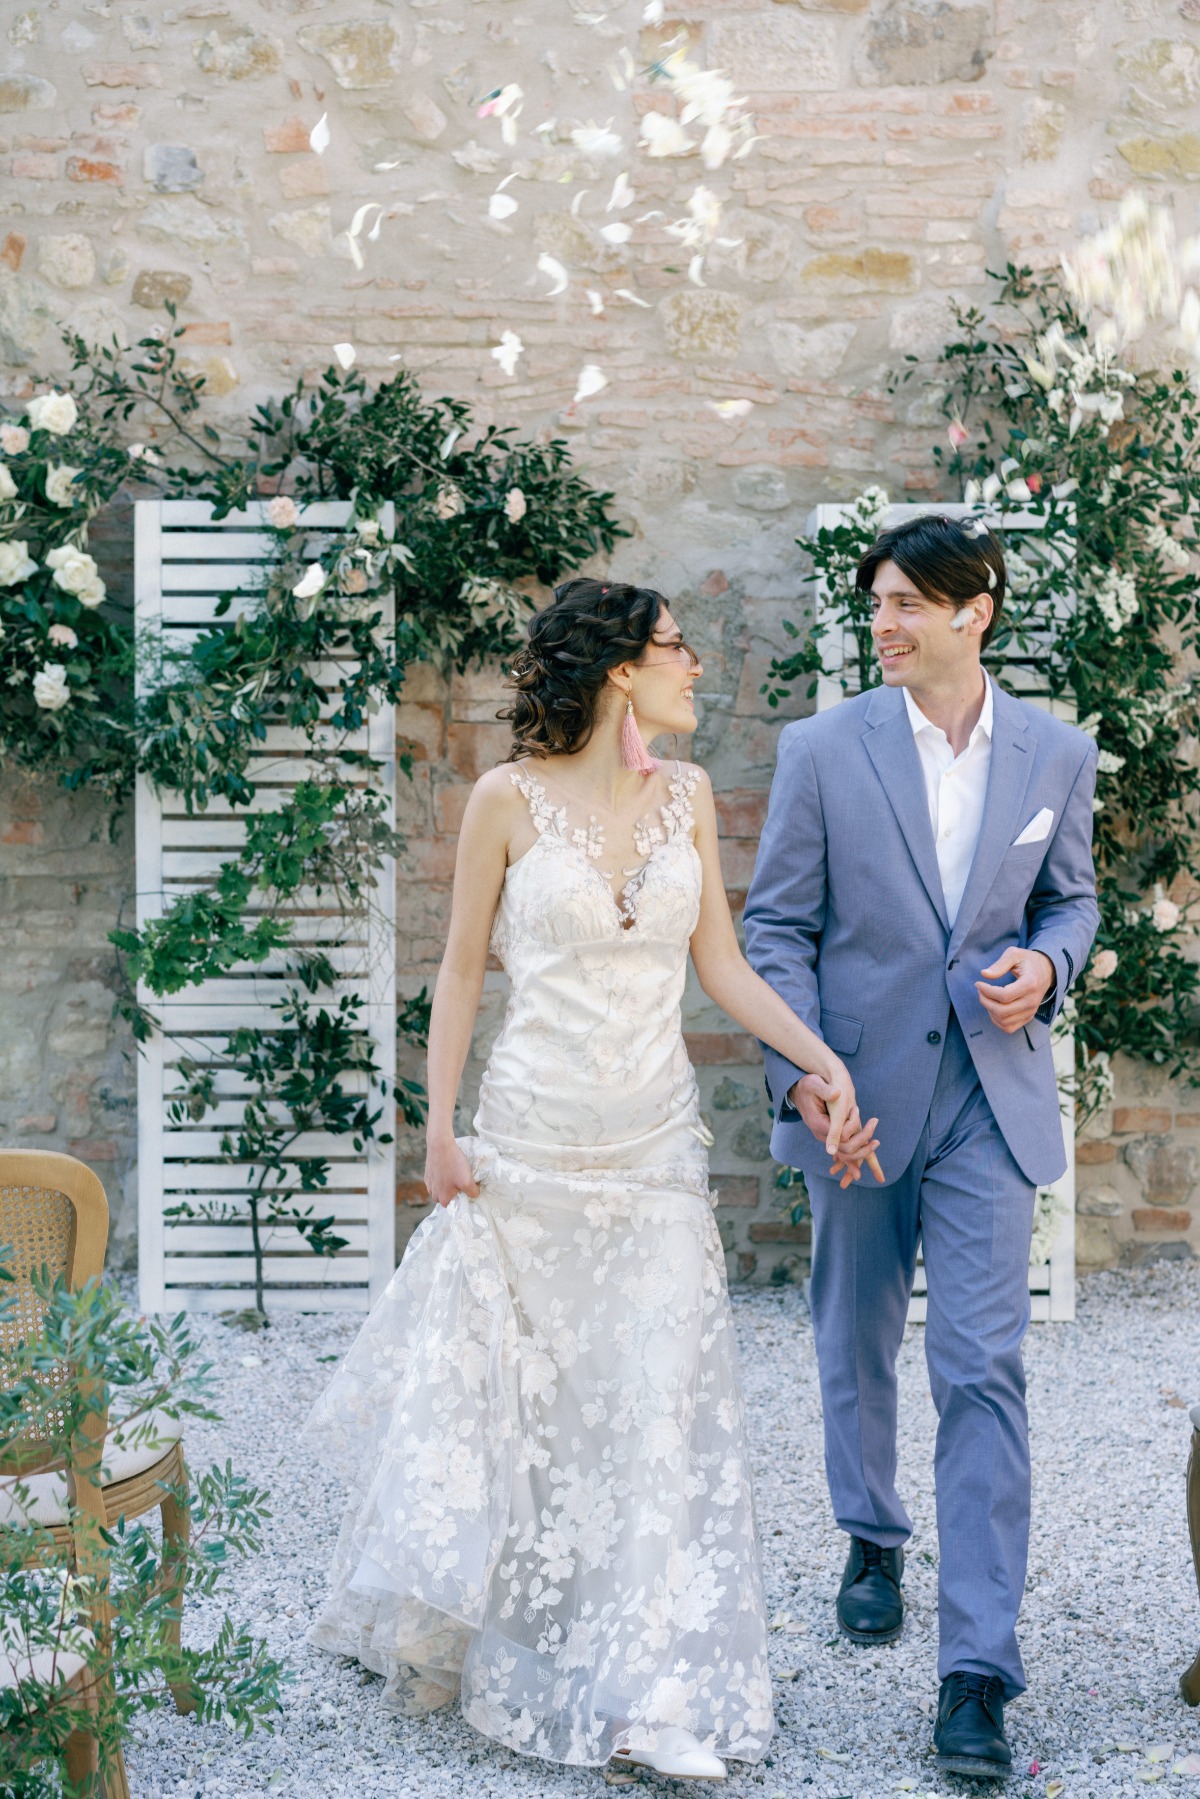 Newlyweds at rustic Italian outdoor wedding ceremony 